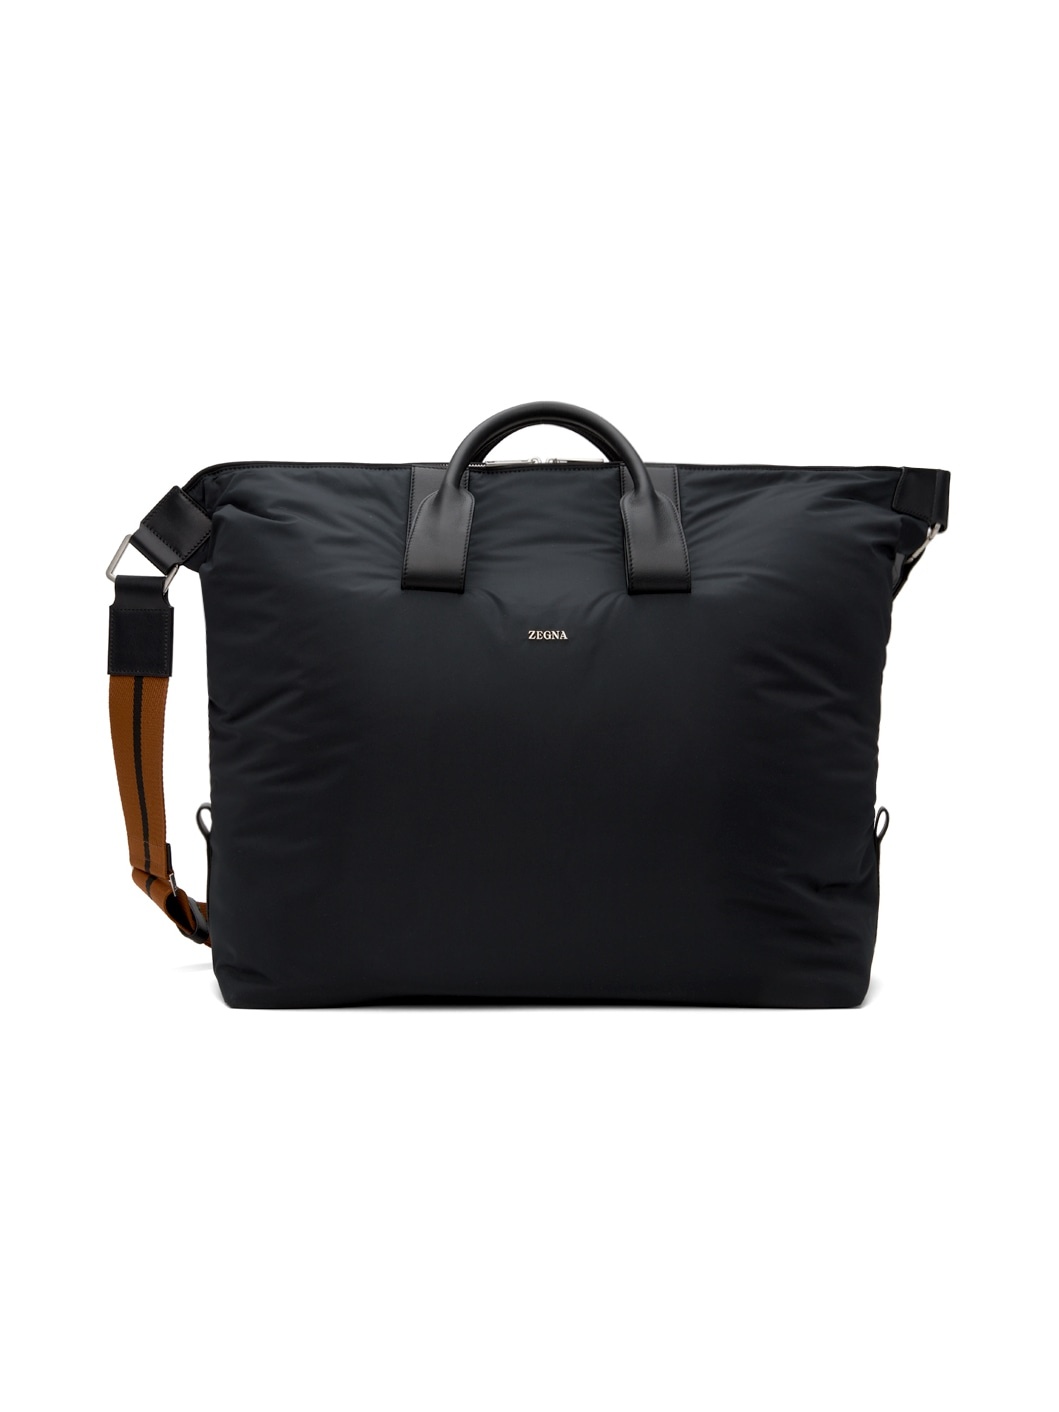 Black Technical Fabric Holdall Duffle Bag - 1